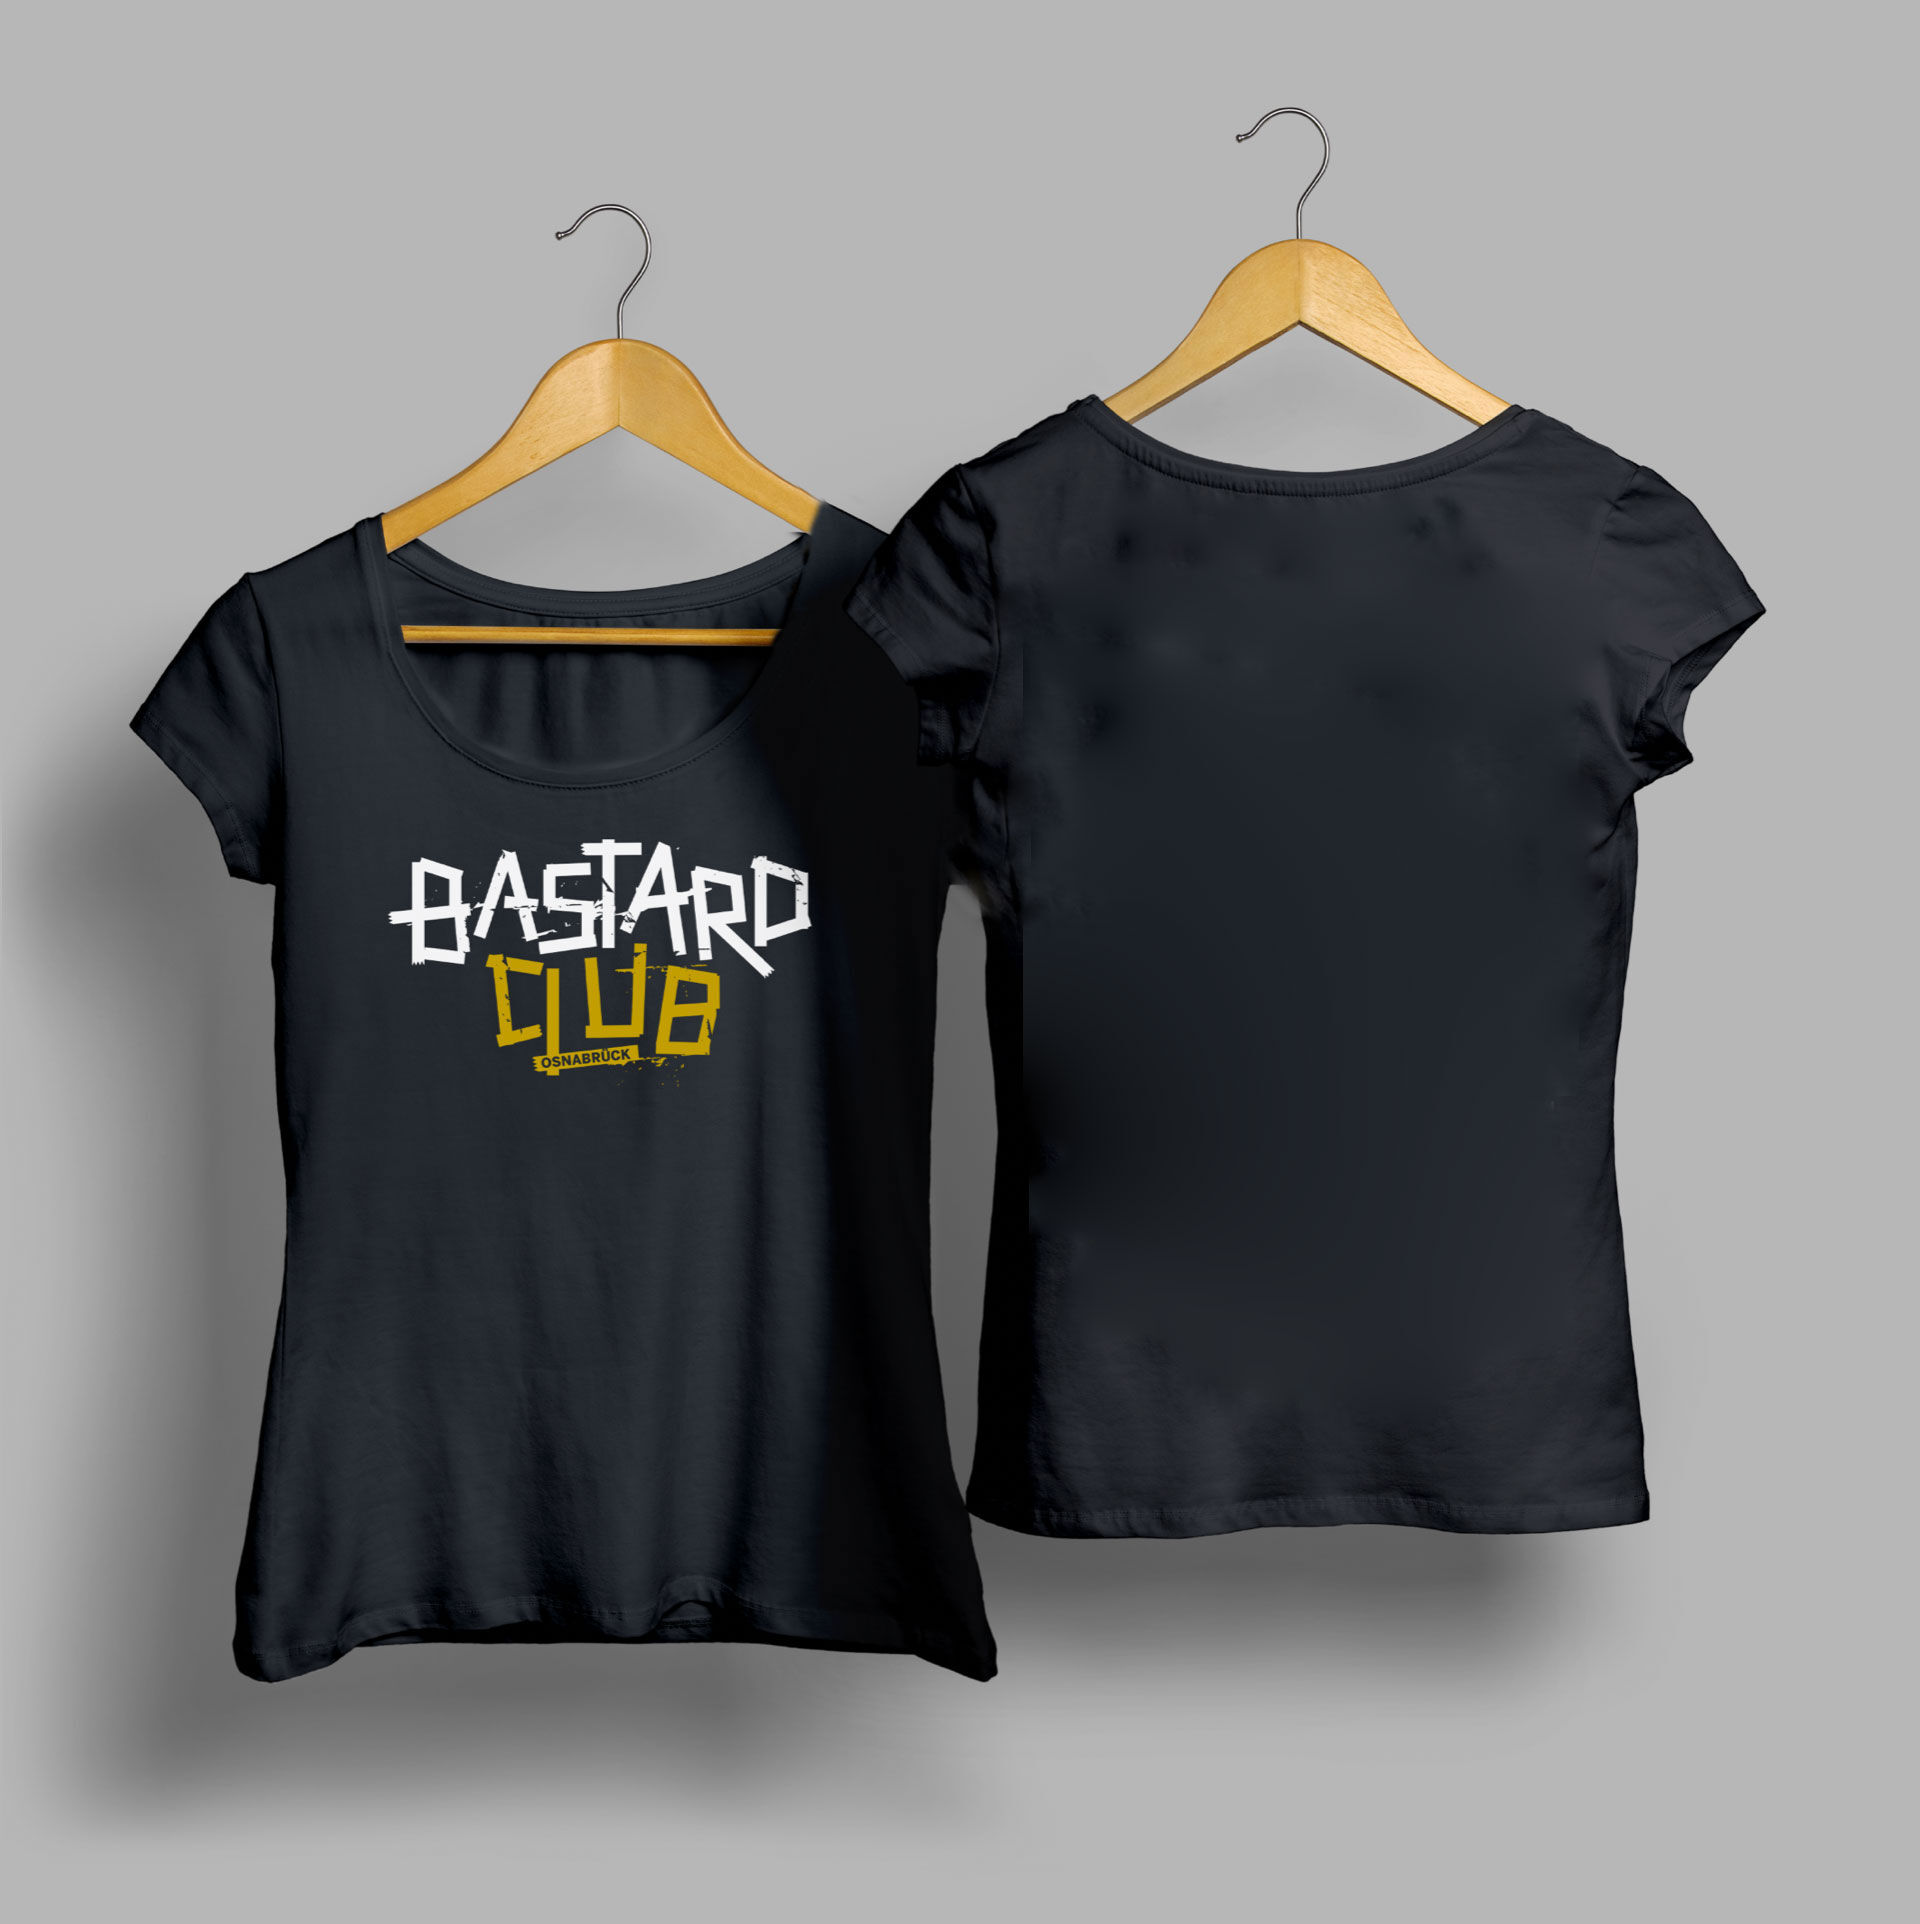 Bastard Club Supporter Girlie Shirt